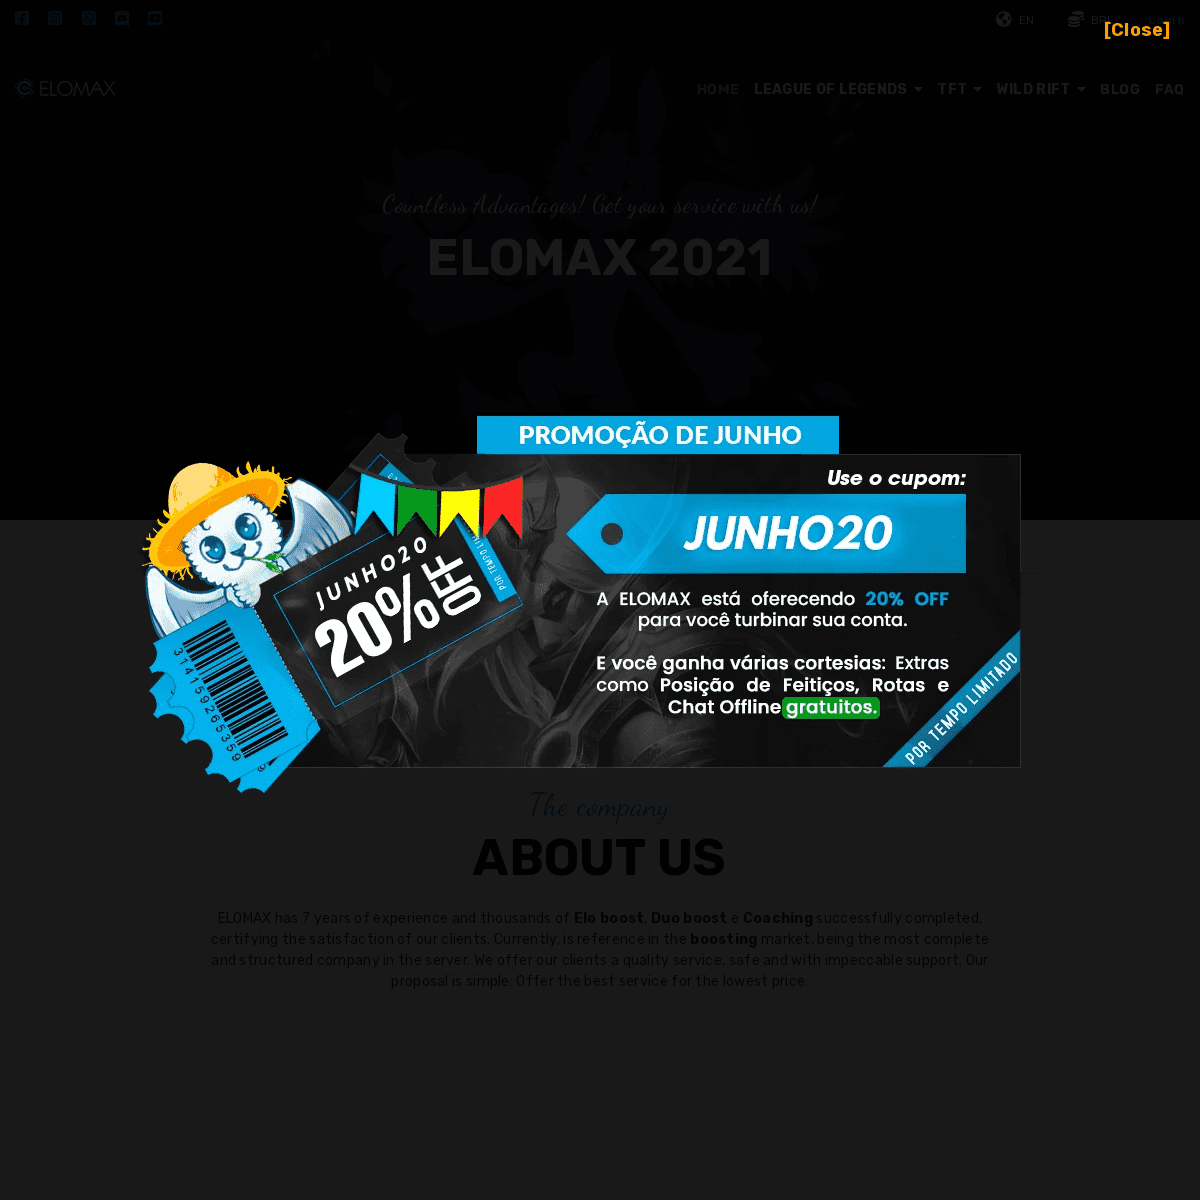 A complete backup of https://elojobmax.com.br